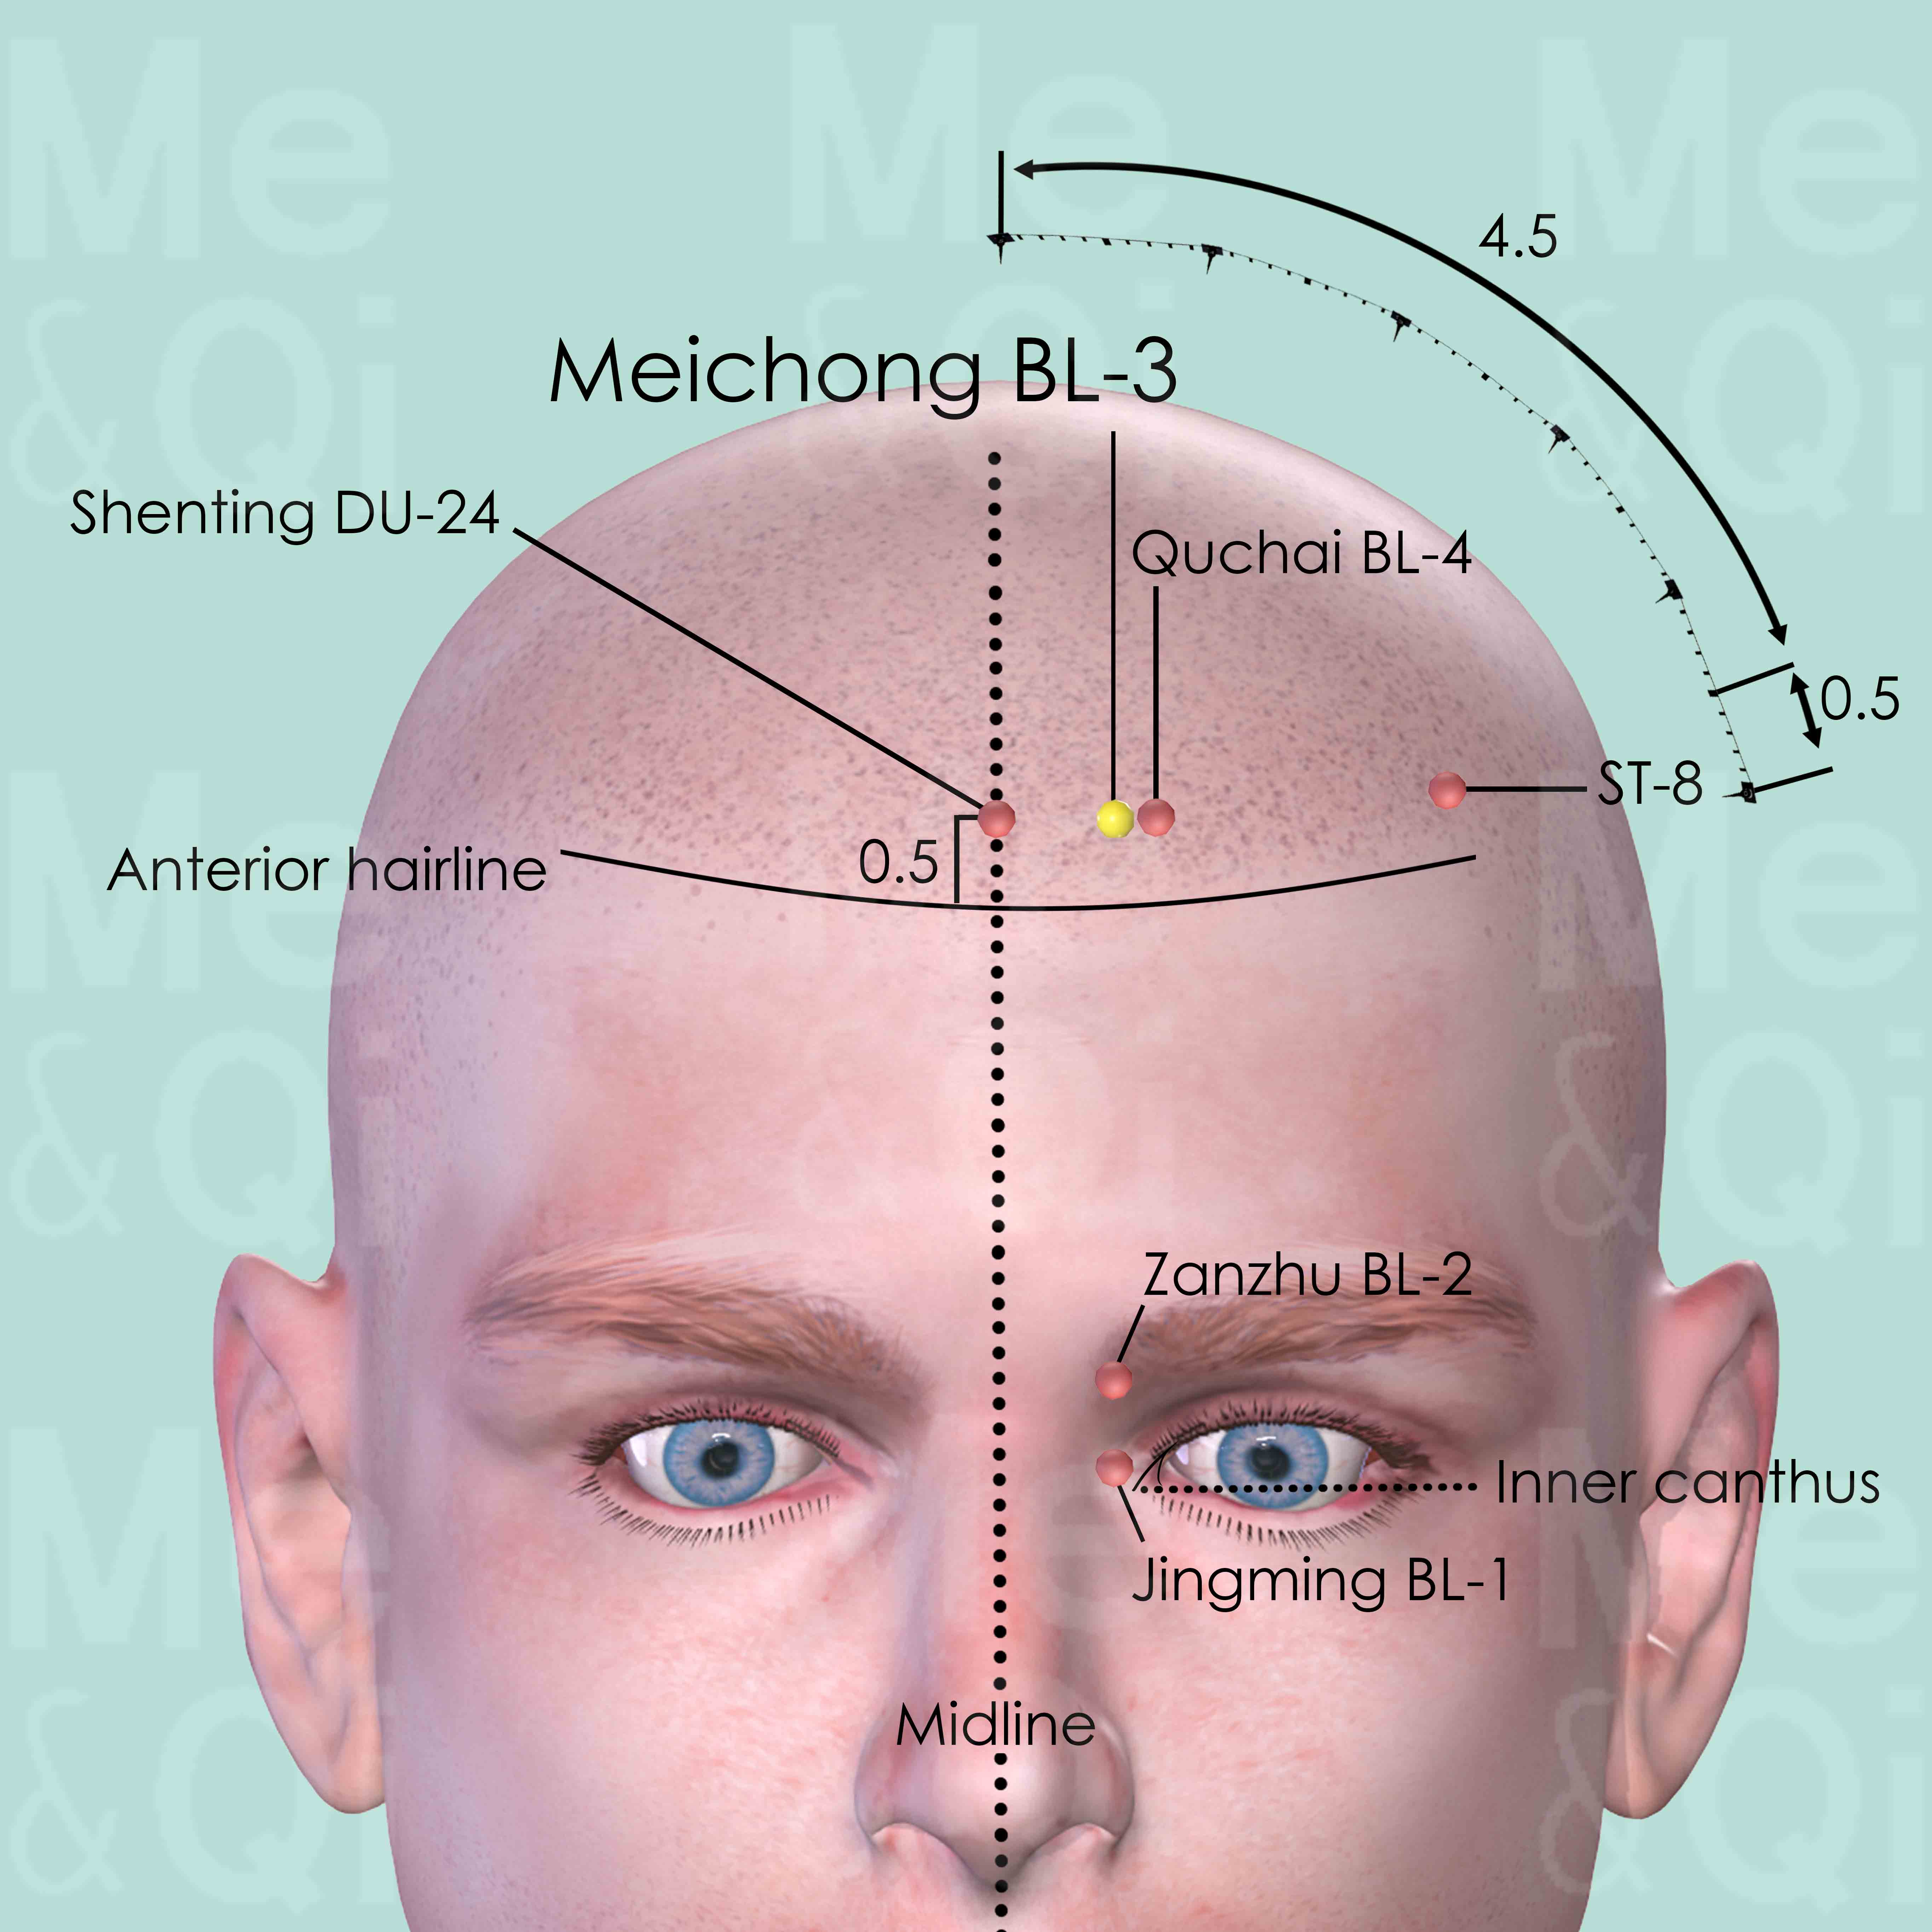 Meichong BL-3